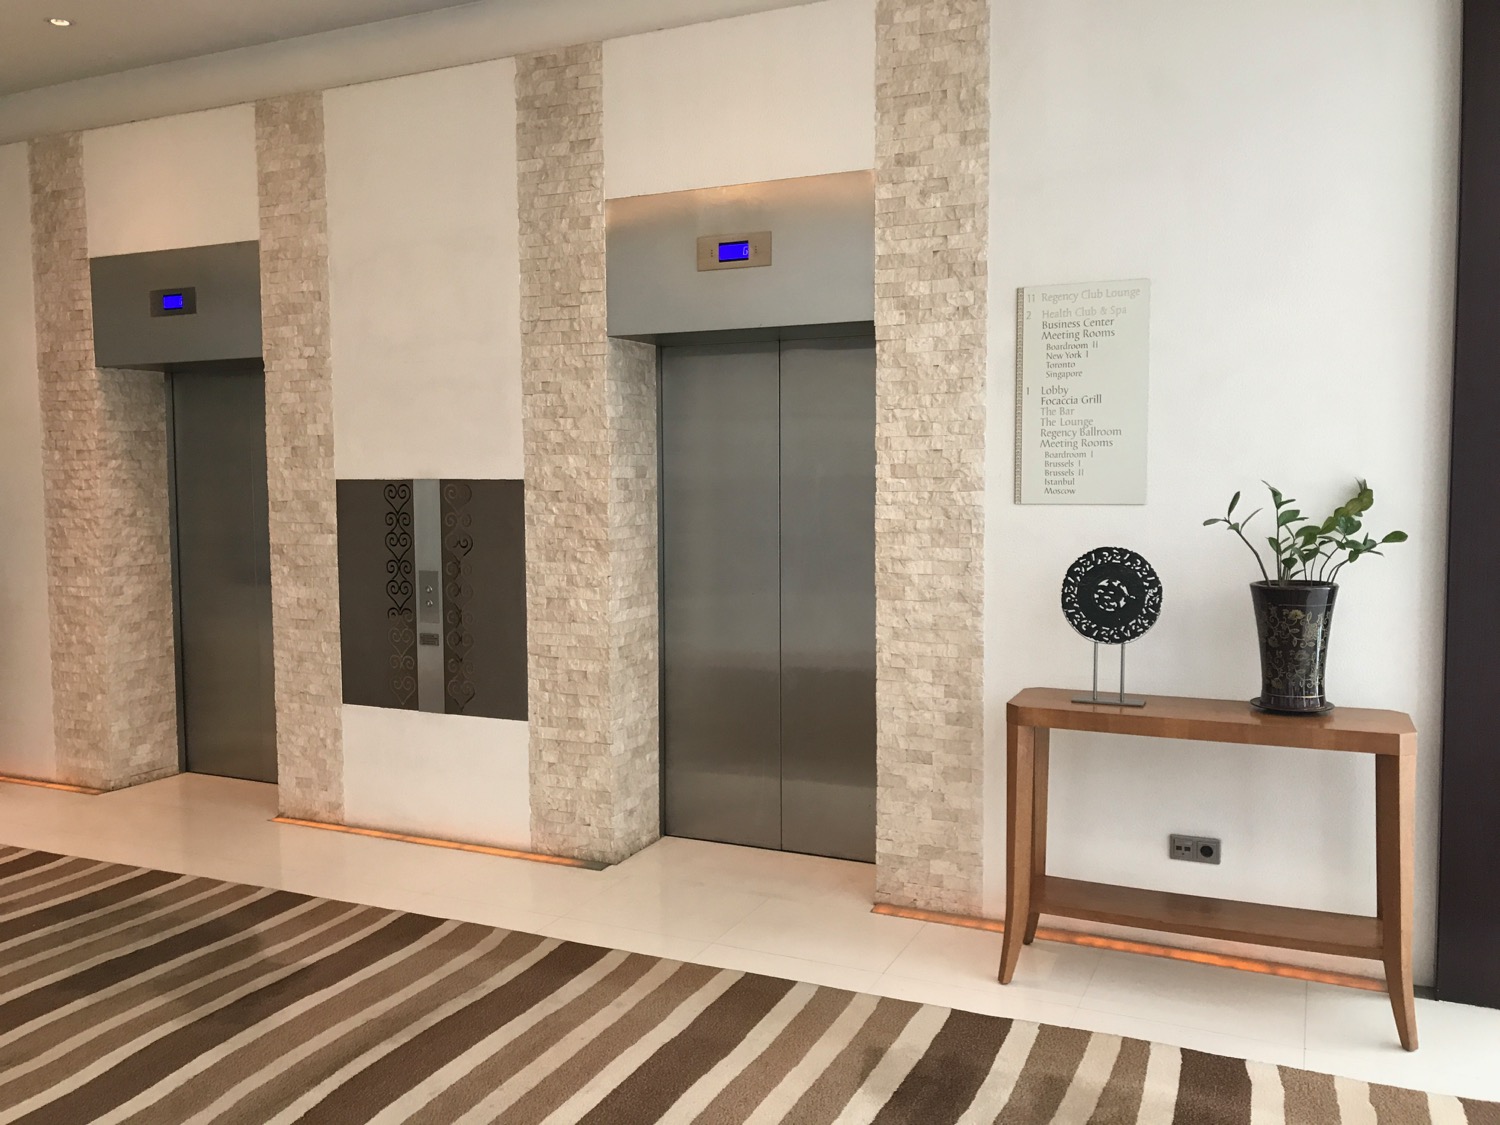 a elevator doors in a room